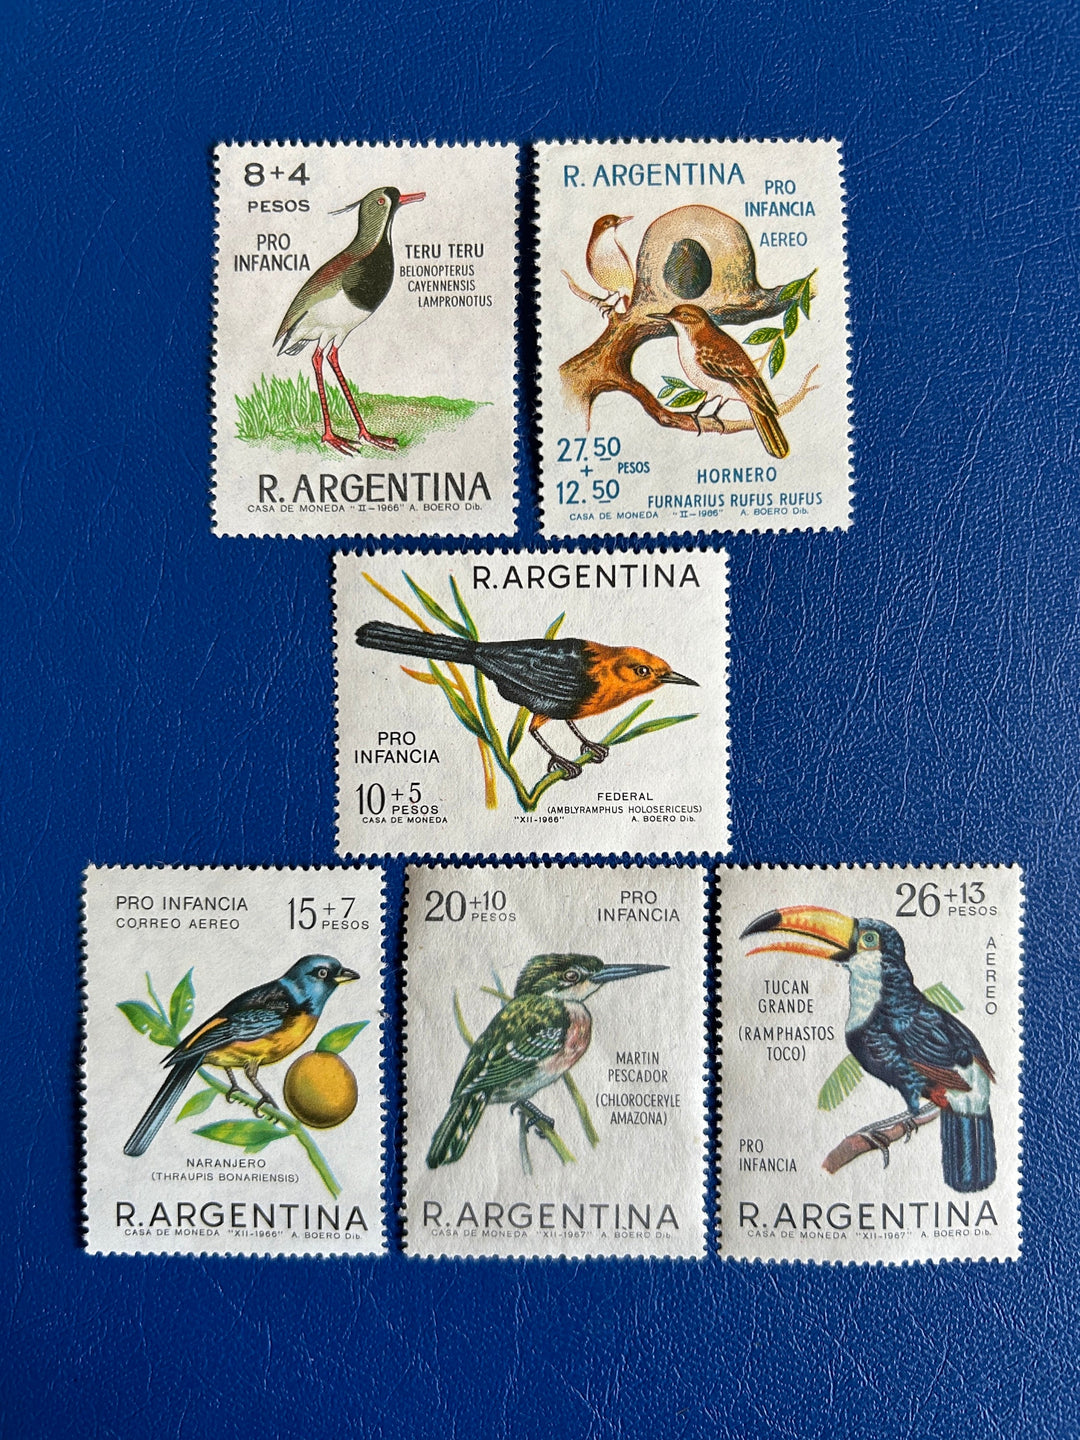 Argentina - Original Vintage Postage Stamps- 1966/67 - Pro Infancia: Birds - for the collector, artist or crafter